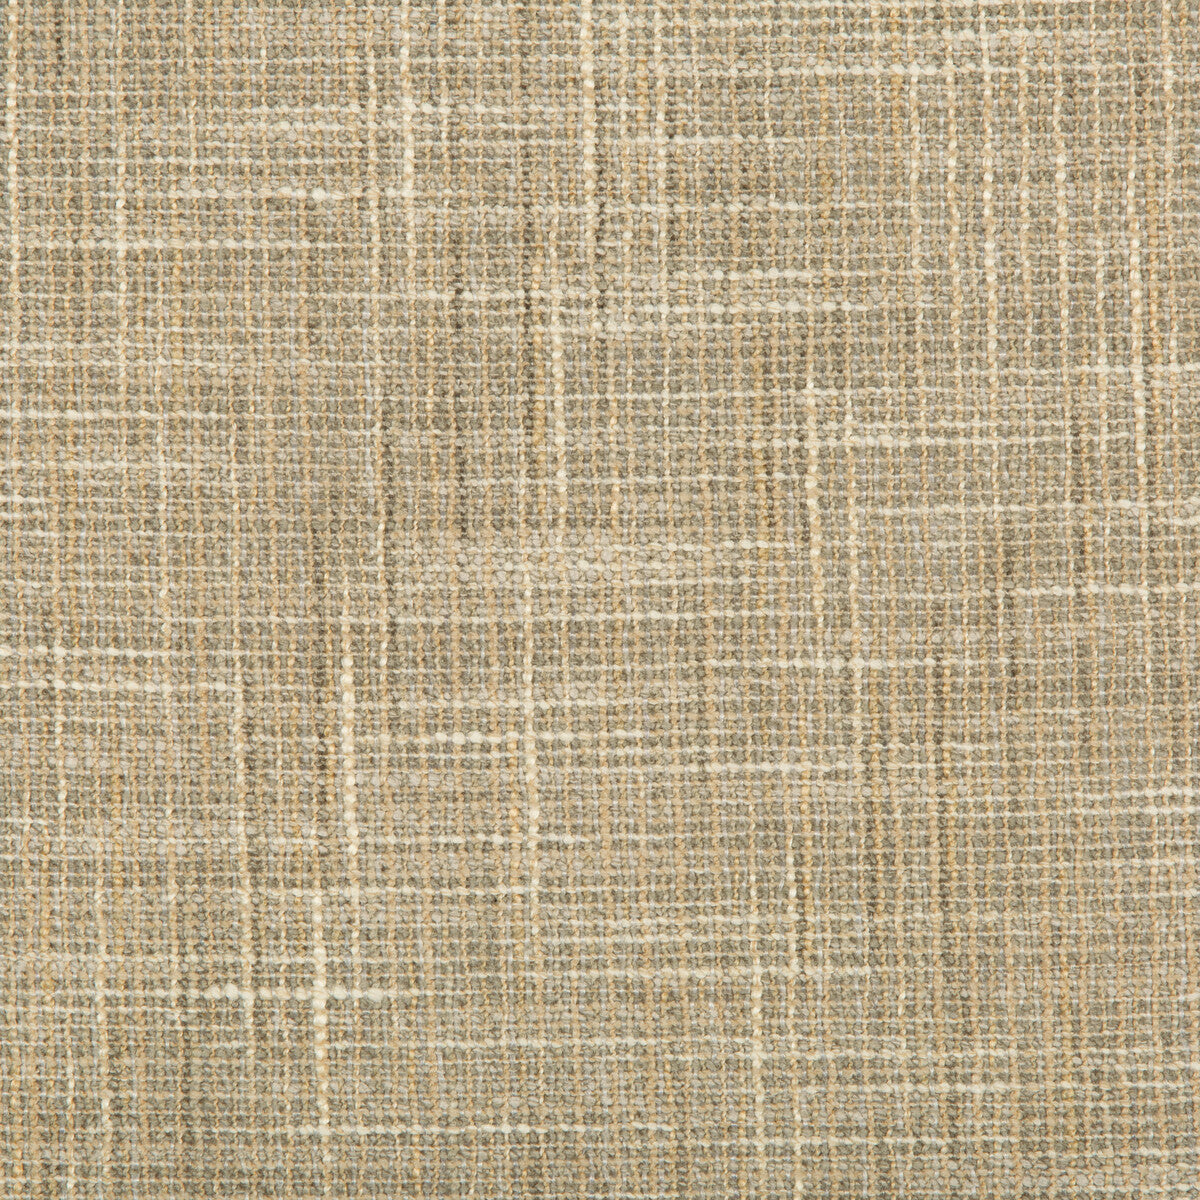 Kravet Smart fabric in 35326-16 color - pattern 35326.16.0 - by Kravet Smart in the Performance Kravetarmor collection